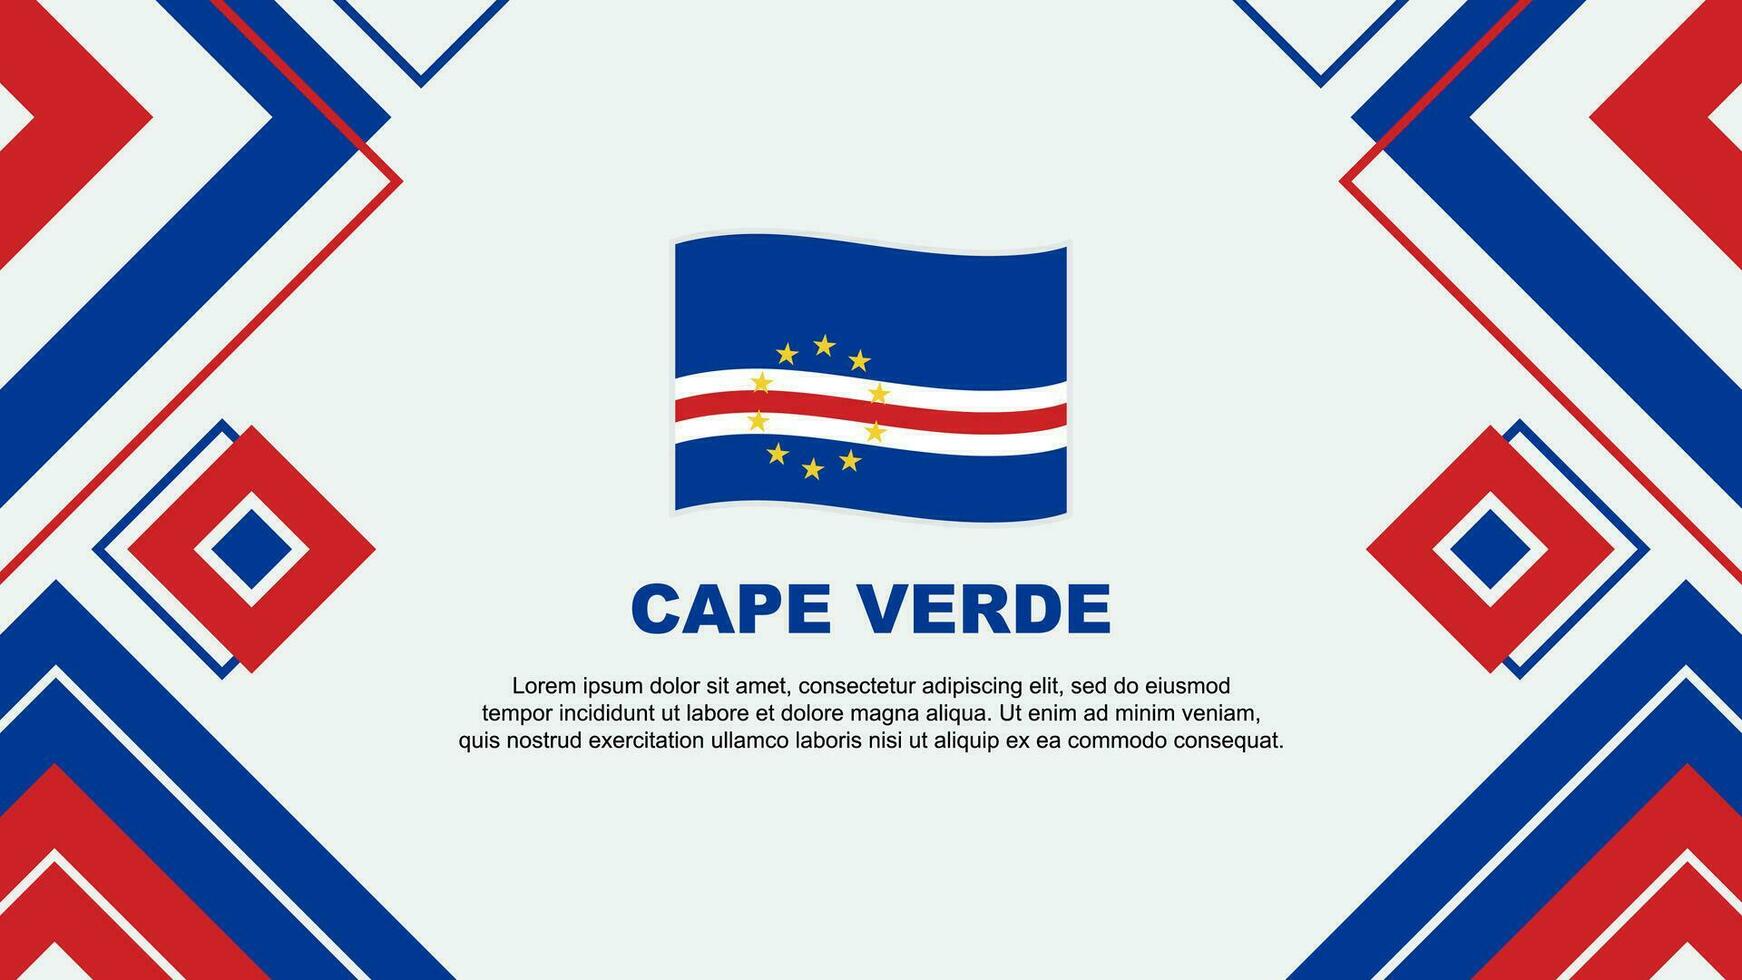 Cape Verde Flag Abstract Background Design Template. Cape Verde Independence Day Banner Wallpaper Vector Illustration. Cape Verde Background